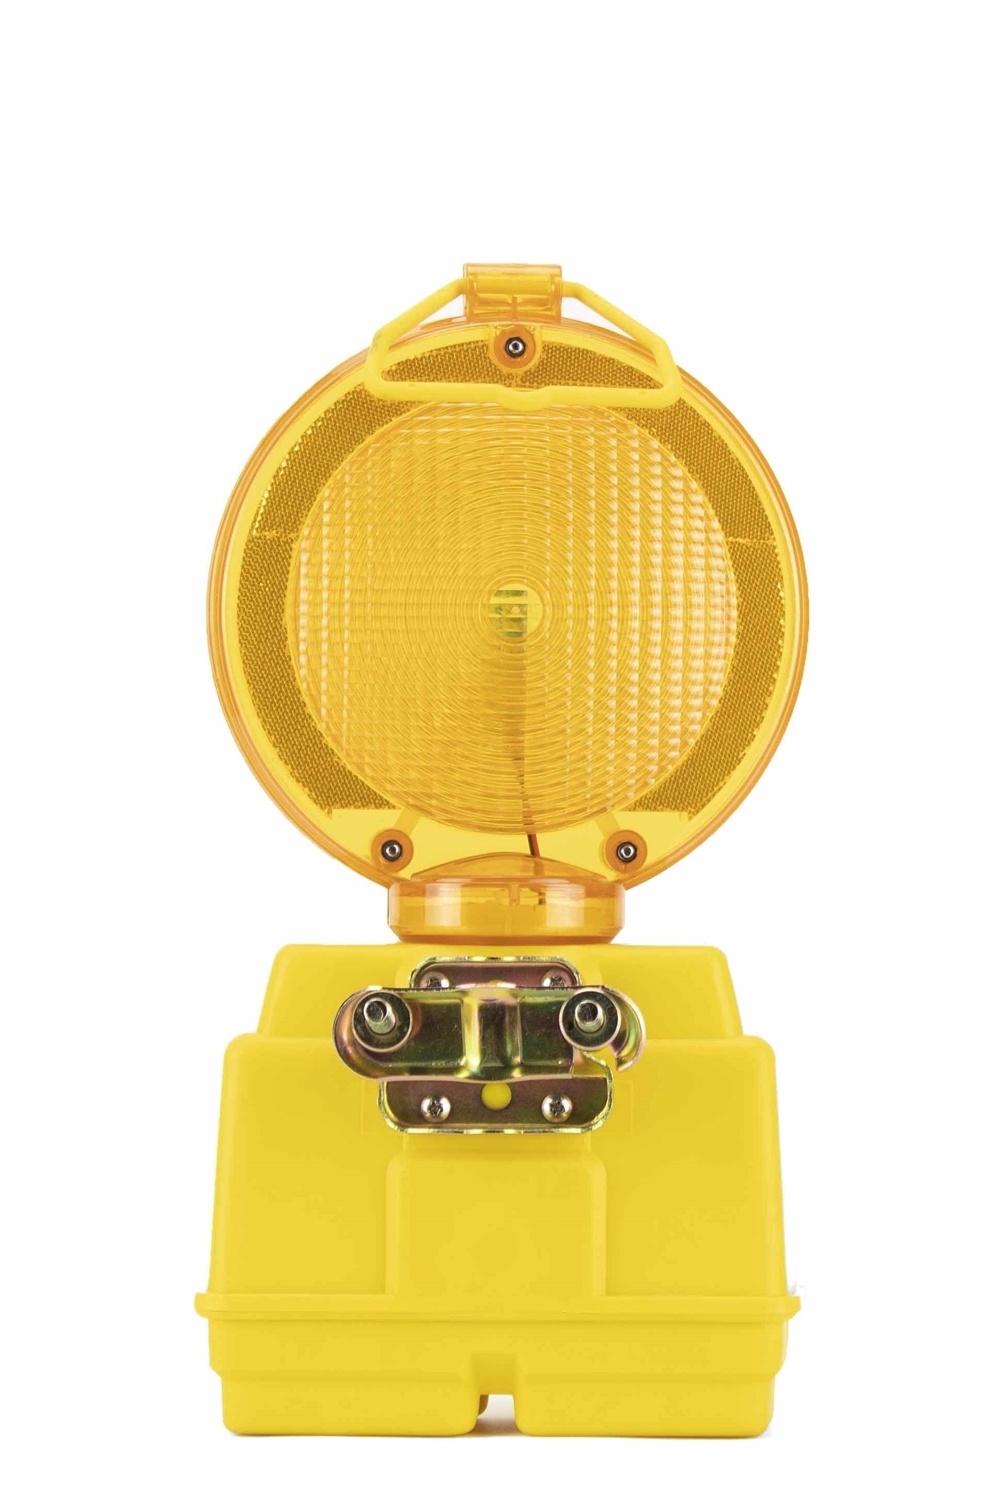 Warning lamp STAR 2000 - yellow